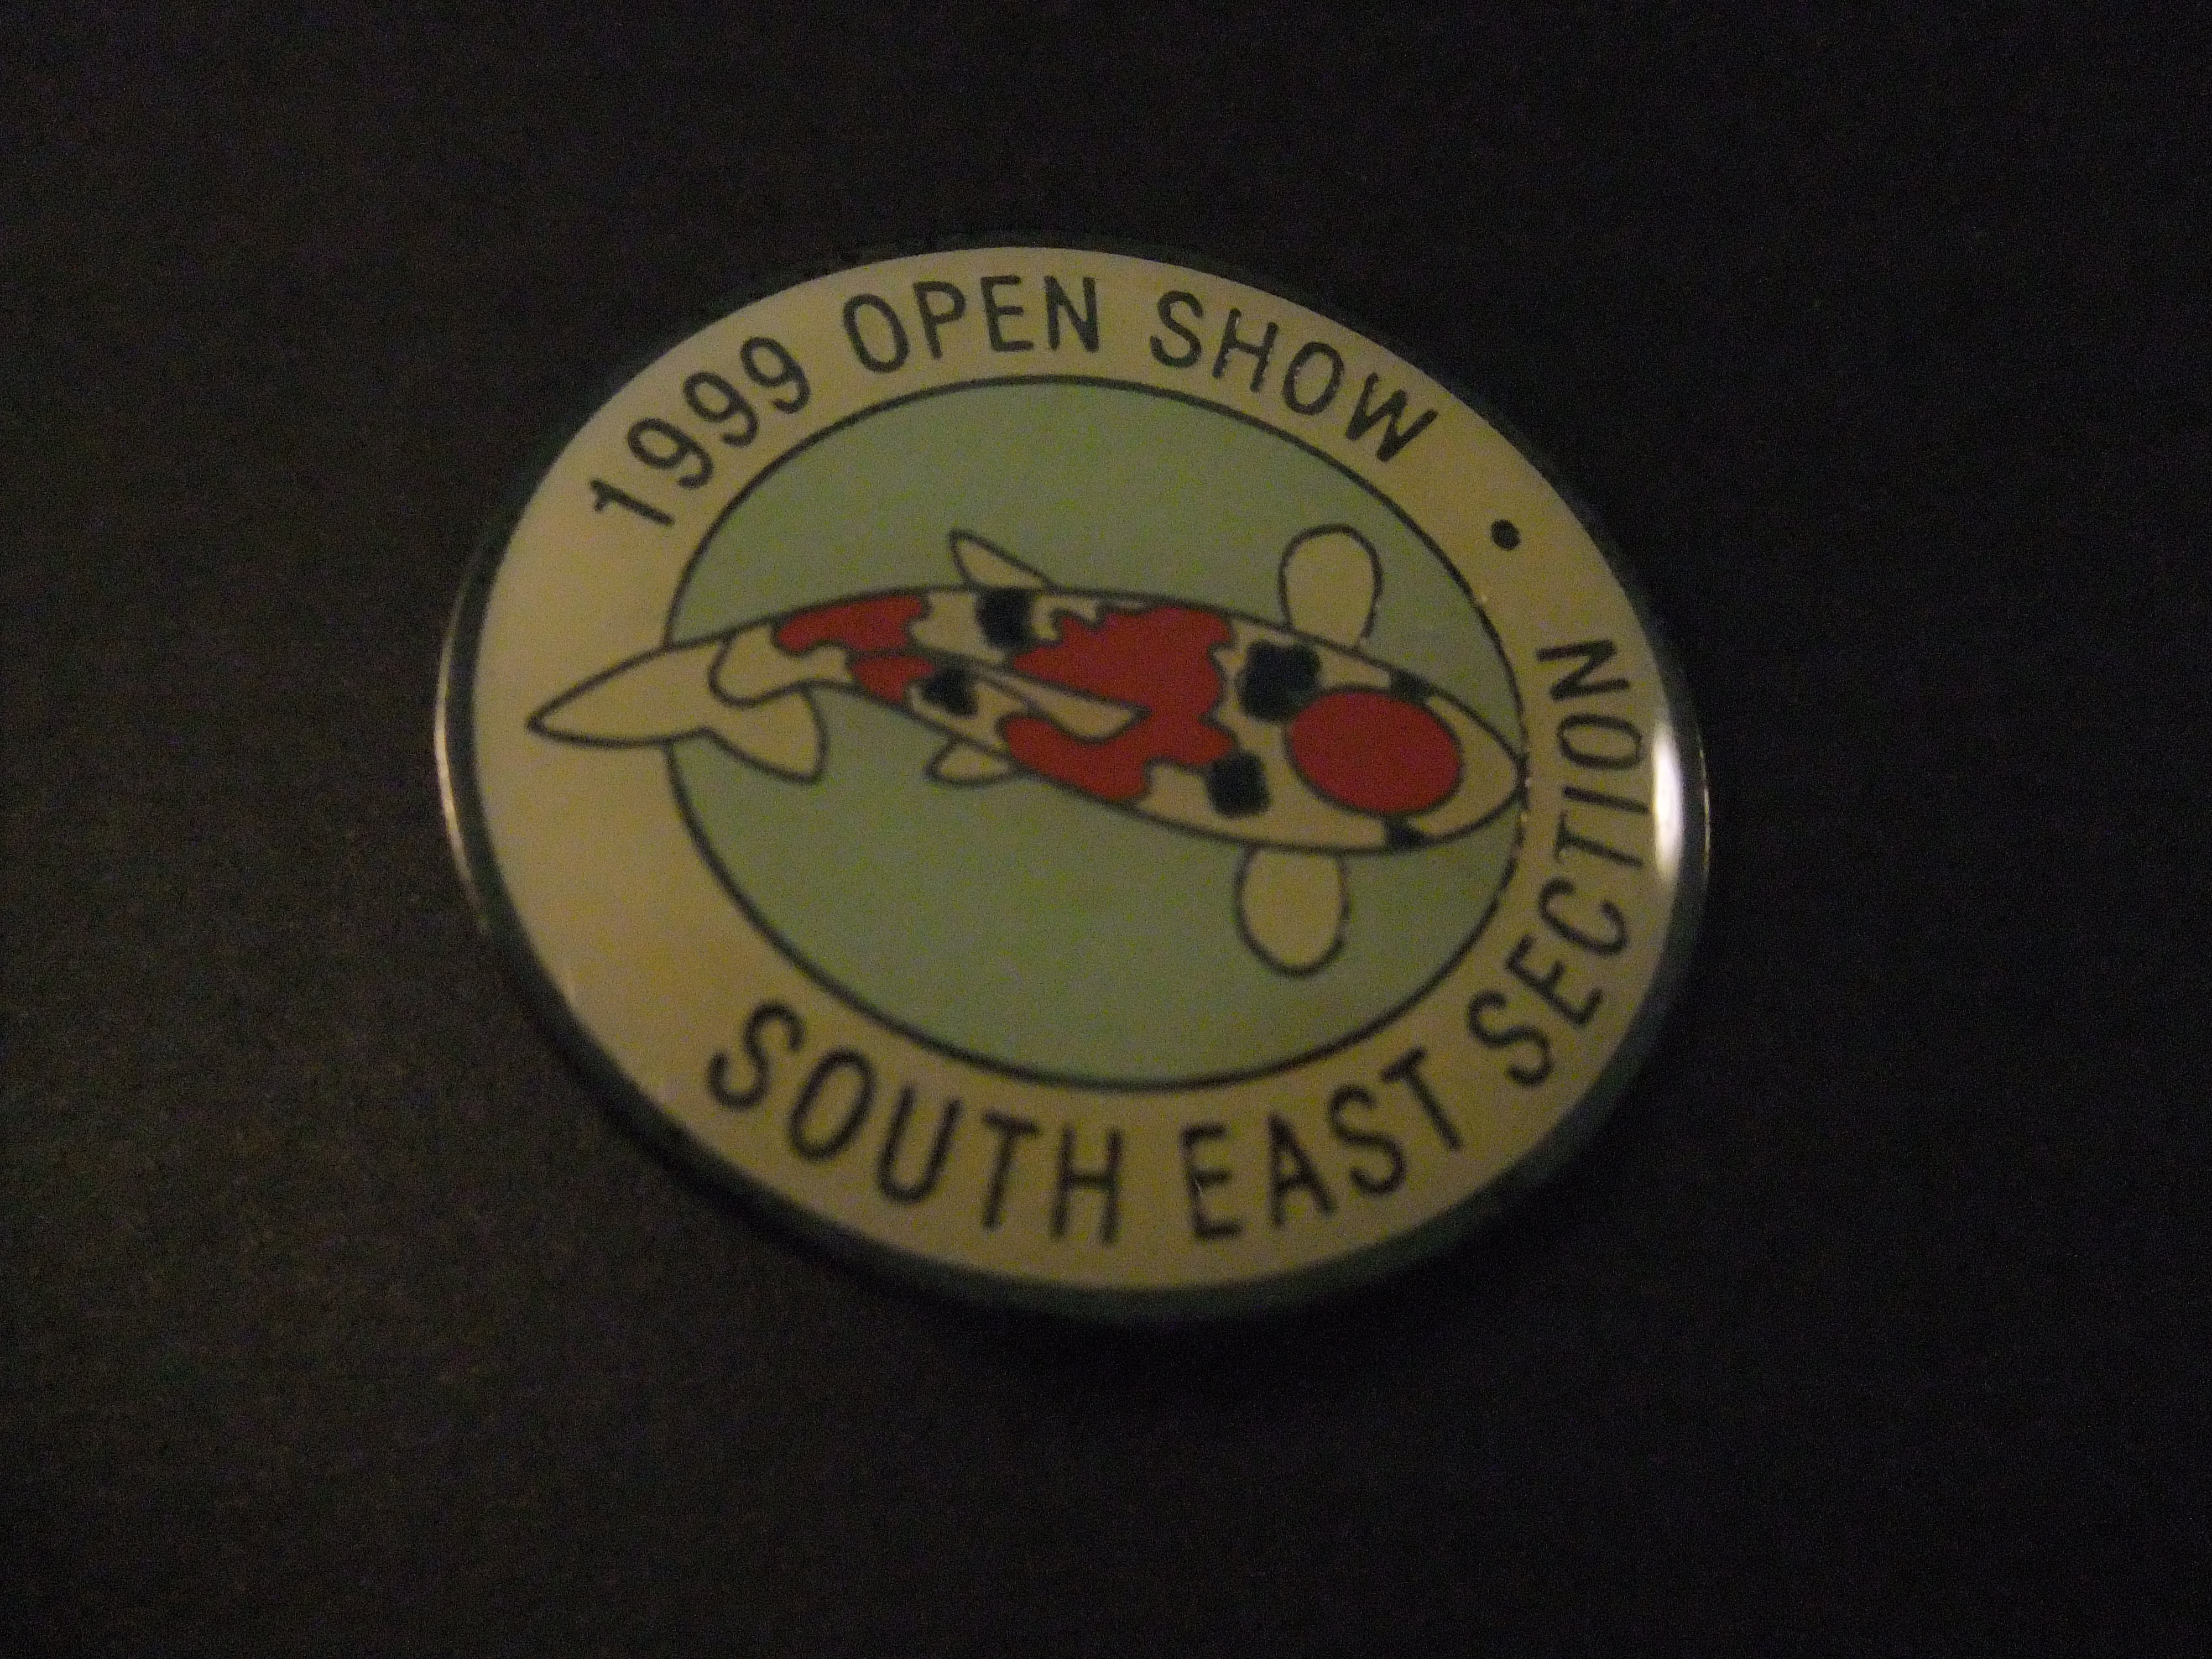 South East Section Koi show 1999